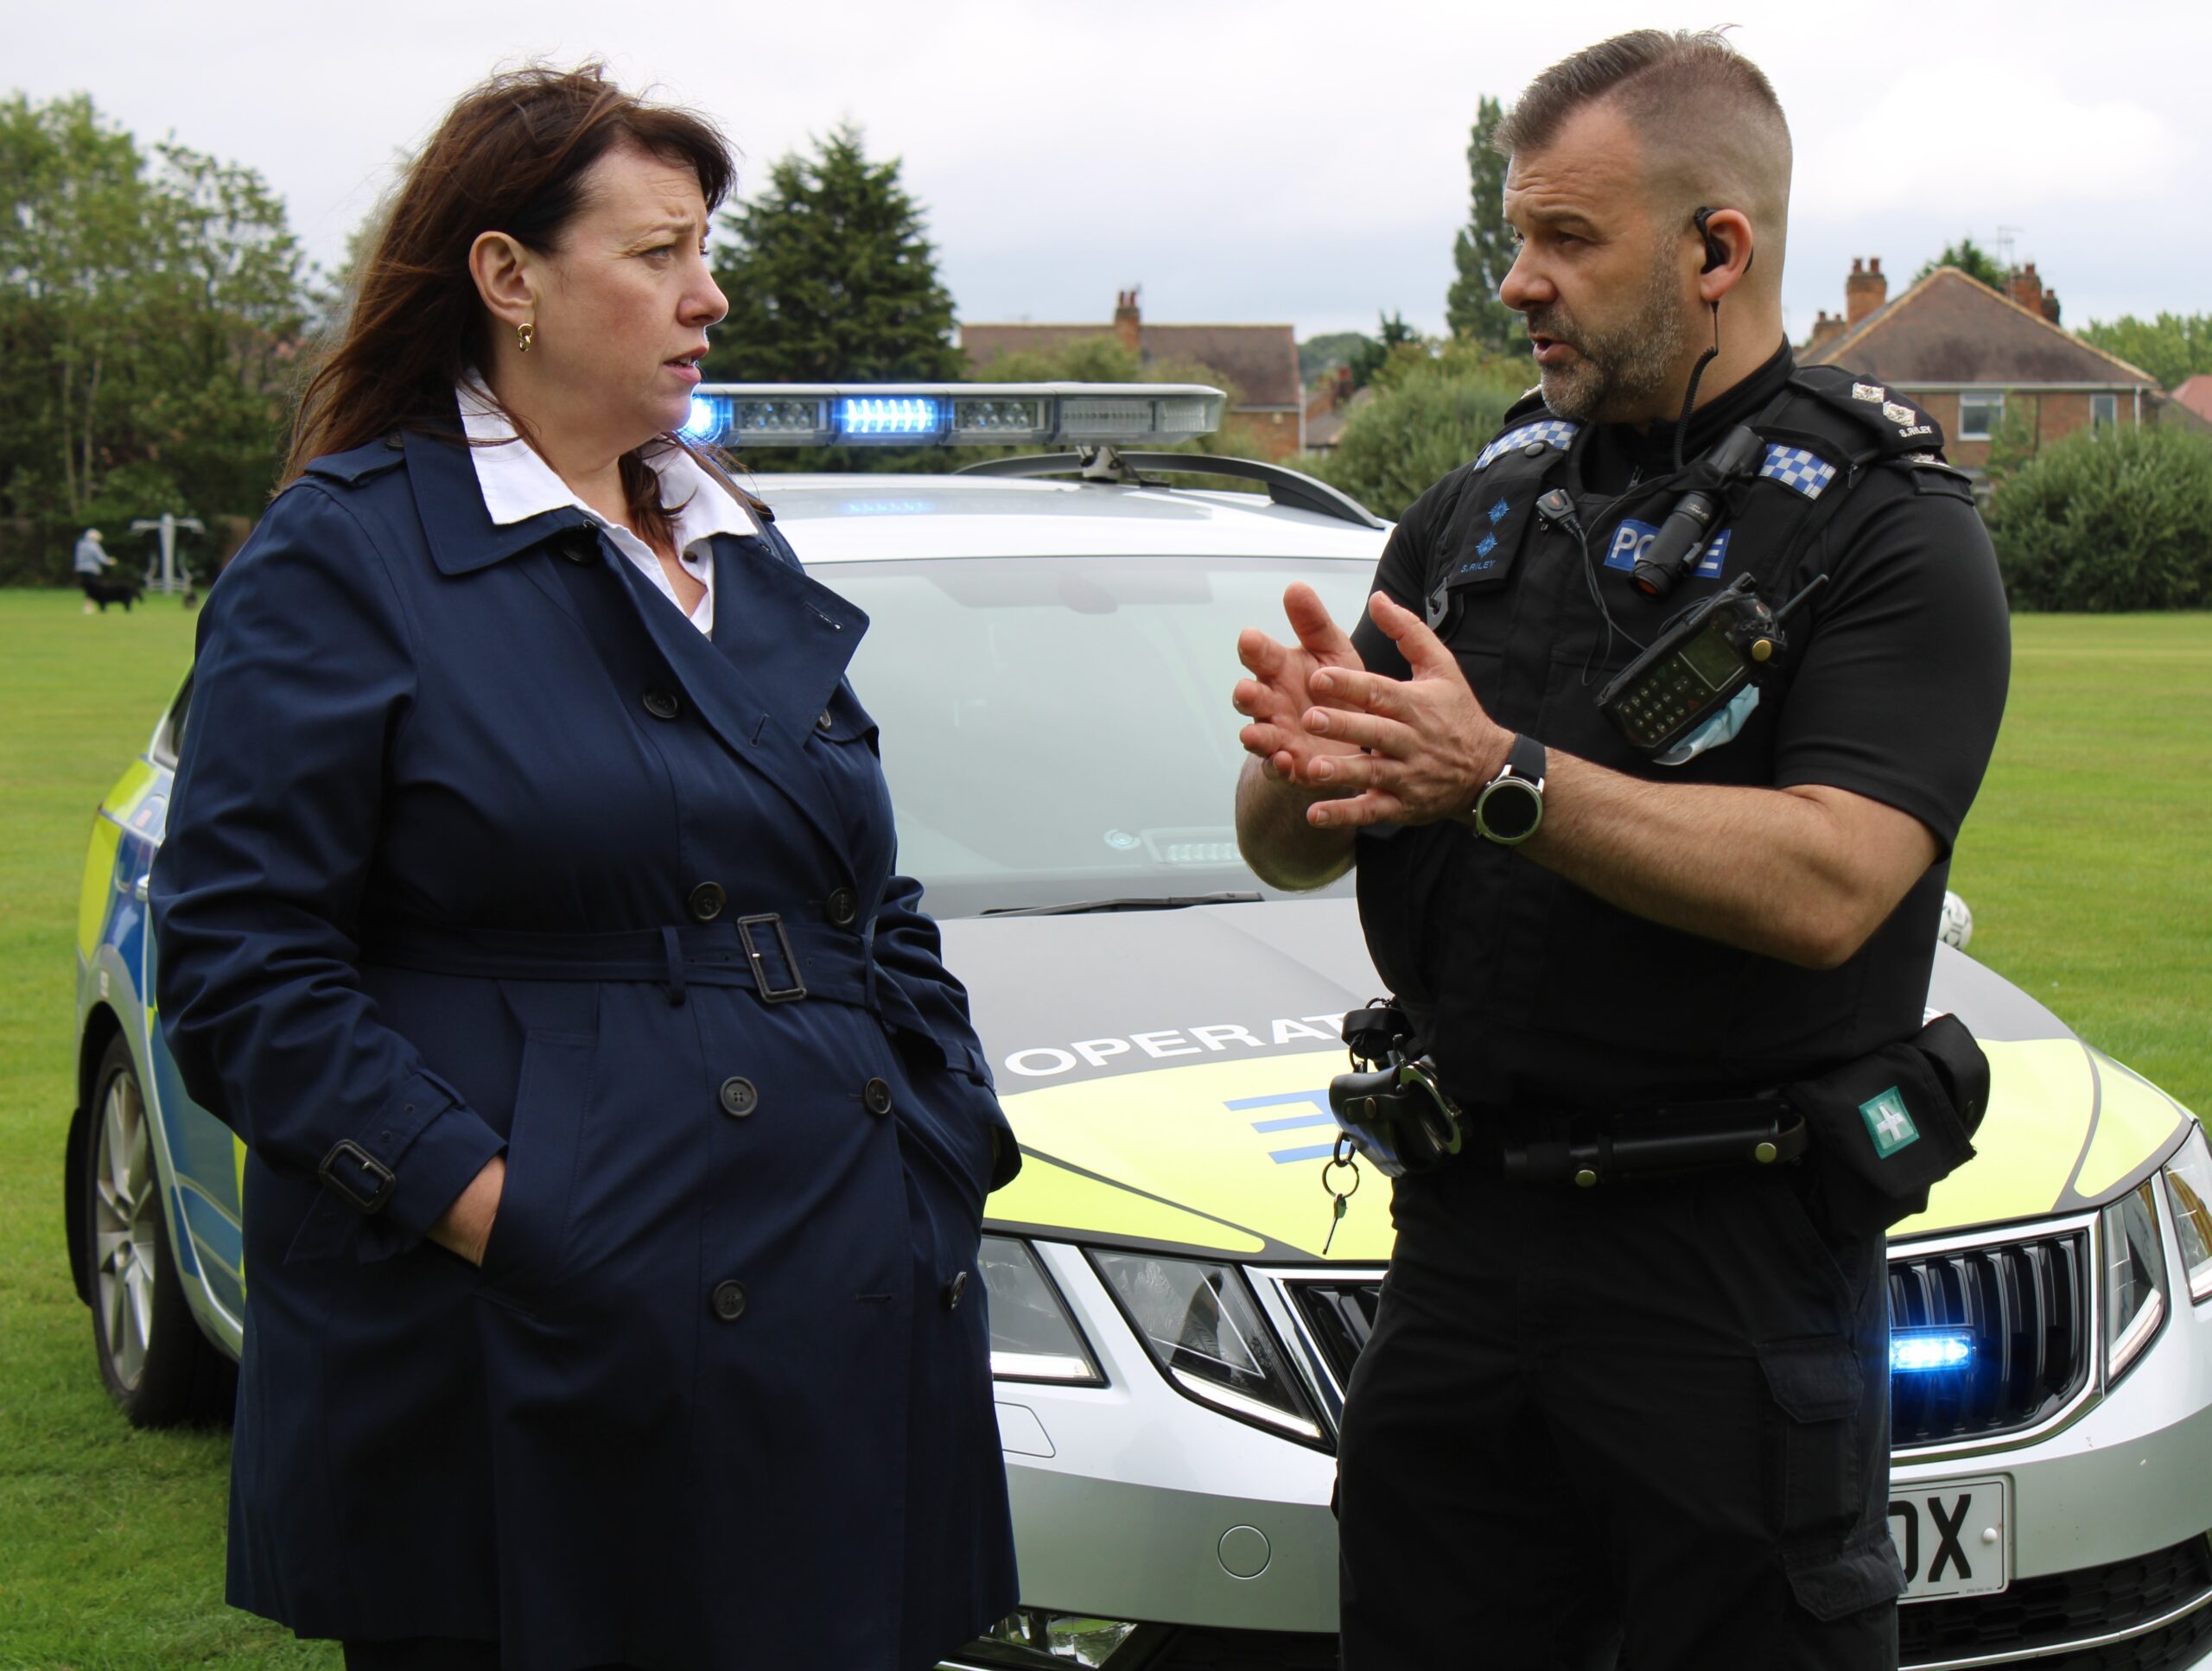 Caroline Henry, Nottinghamshire Police and Crime Commissioner talking to a police officer